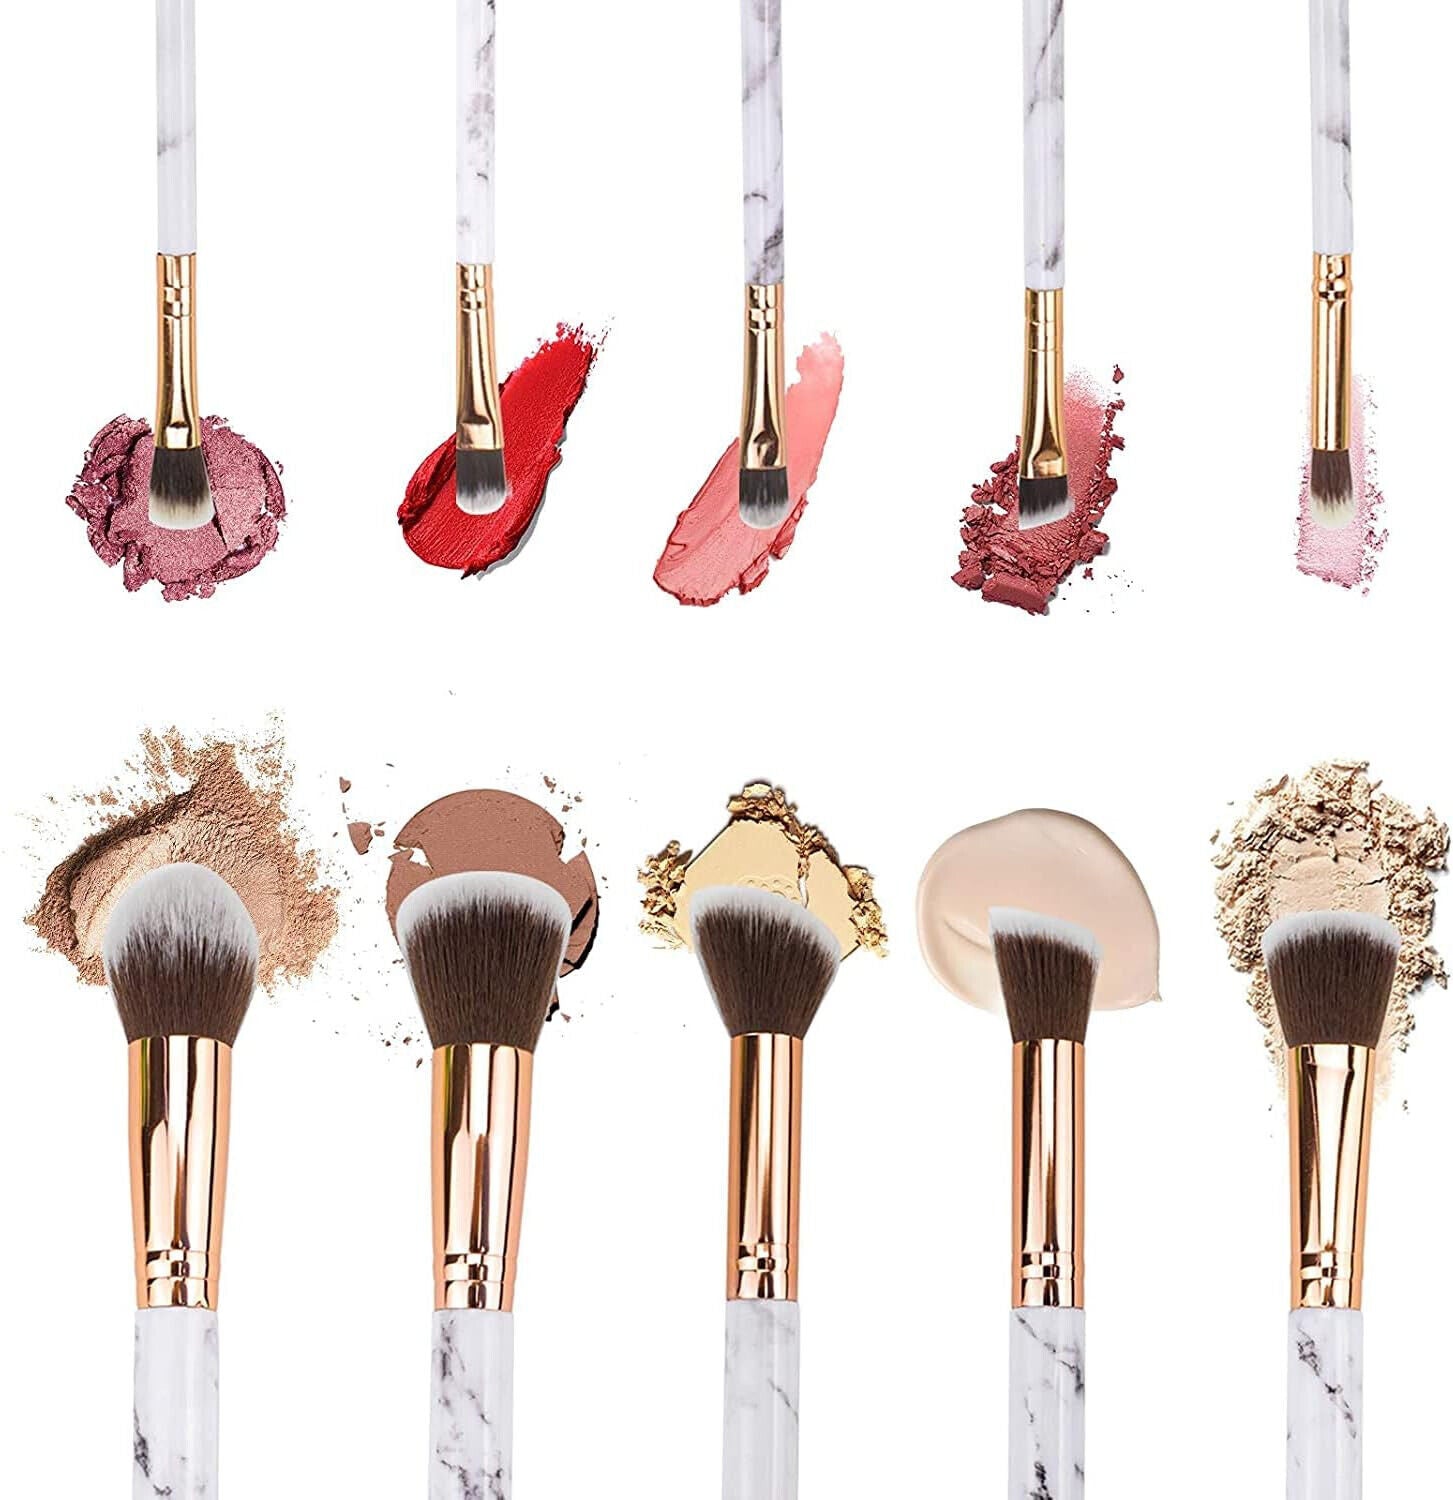 10 Pcs Kabuki Makeup Brushes Set Eye Shadow Blusher Face Powder Foundation UK